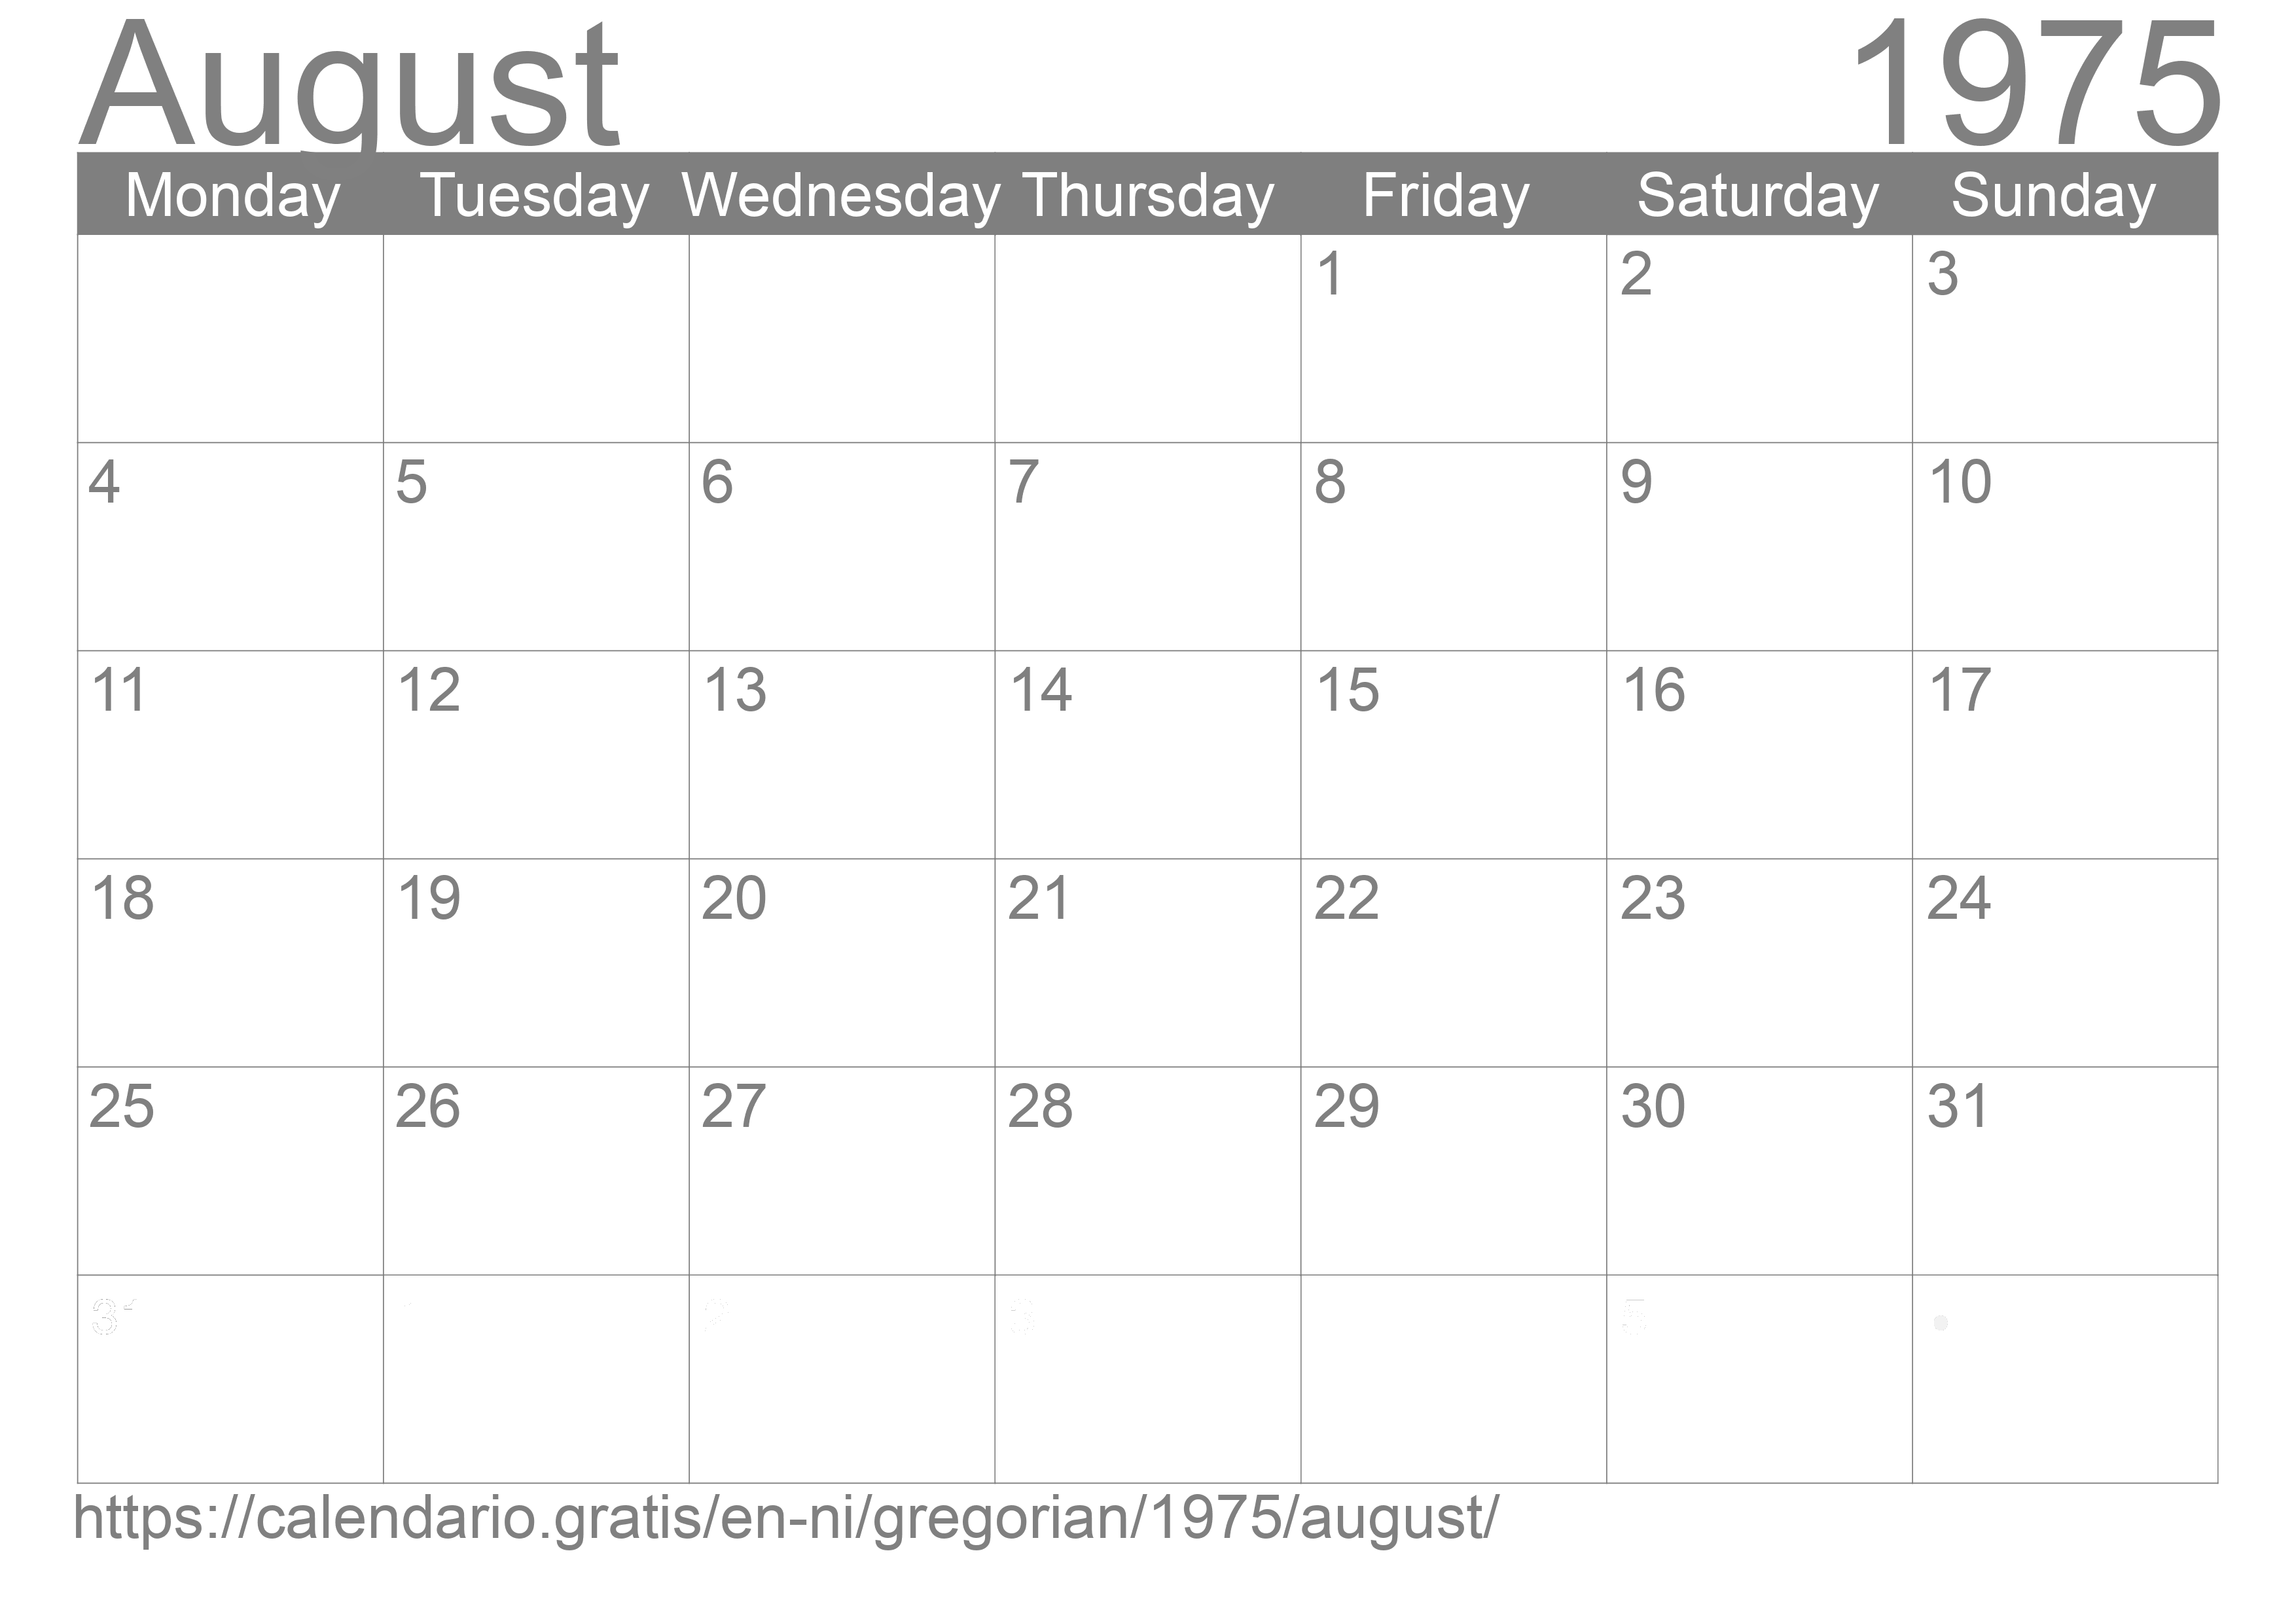 Calendar August 1975 to print